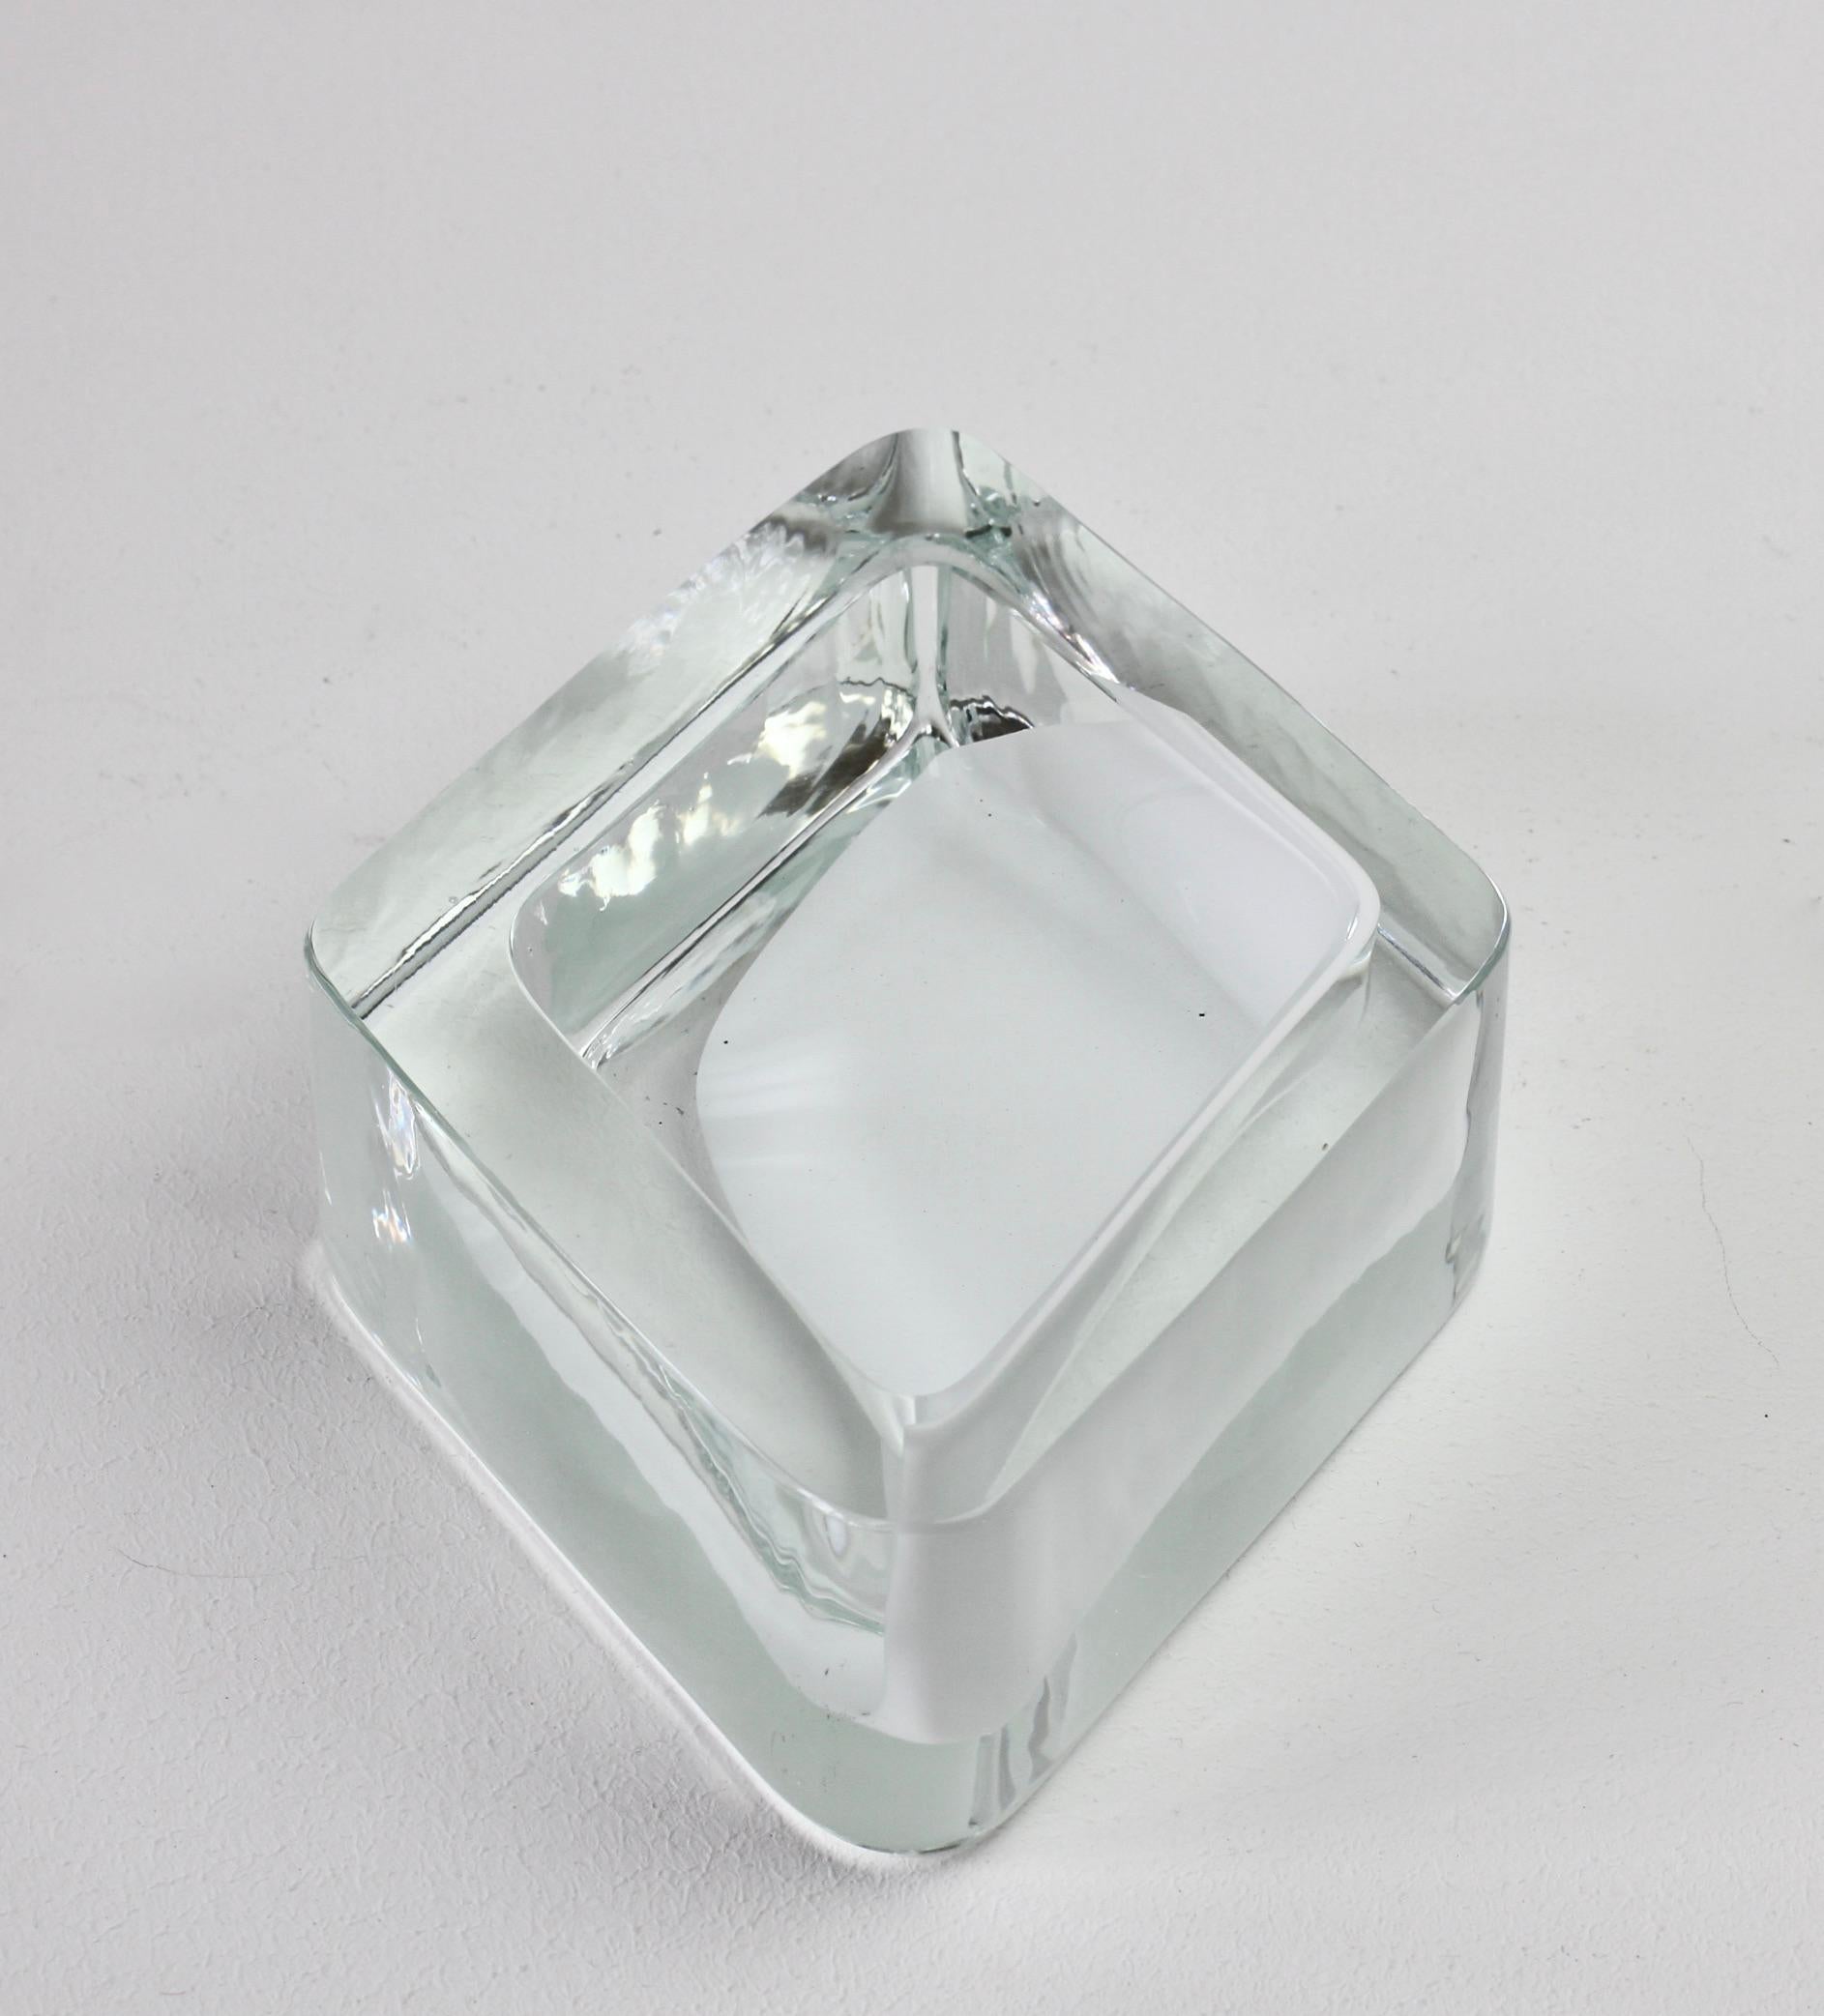 Large Cenedese Italian Rhombus White and Clear Murano Glass Bowl, Dish, Ashtray 8